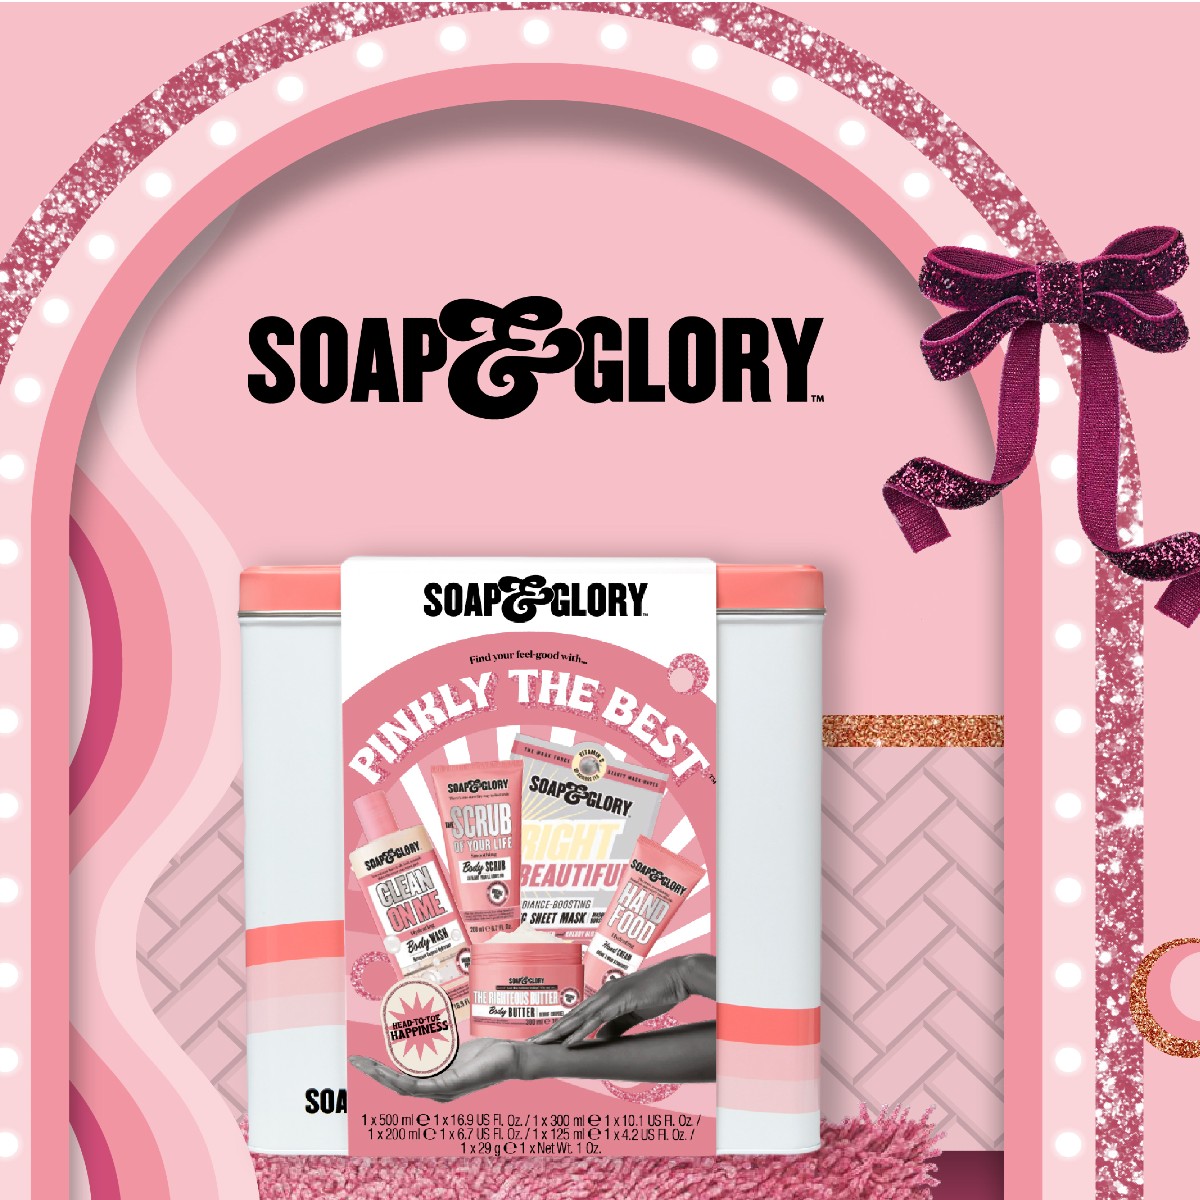 Soap and glory sustainability journey